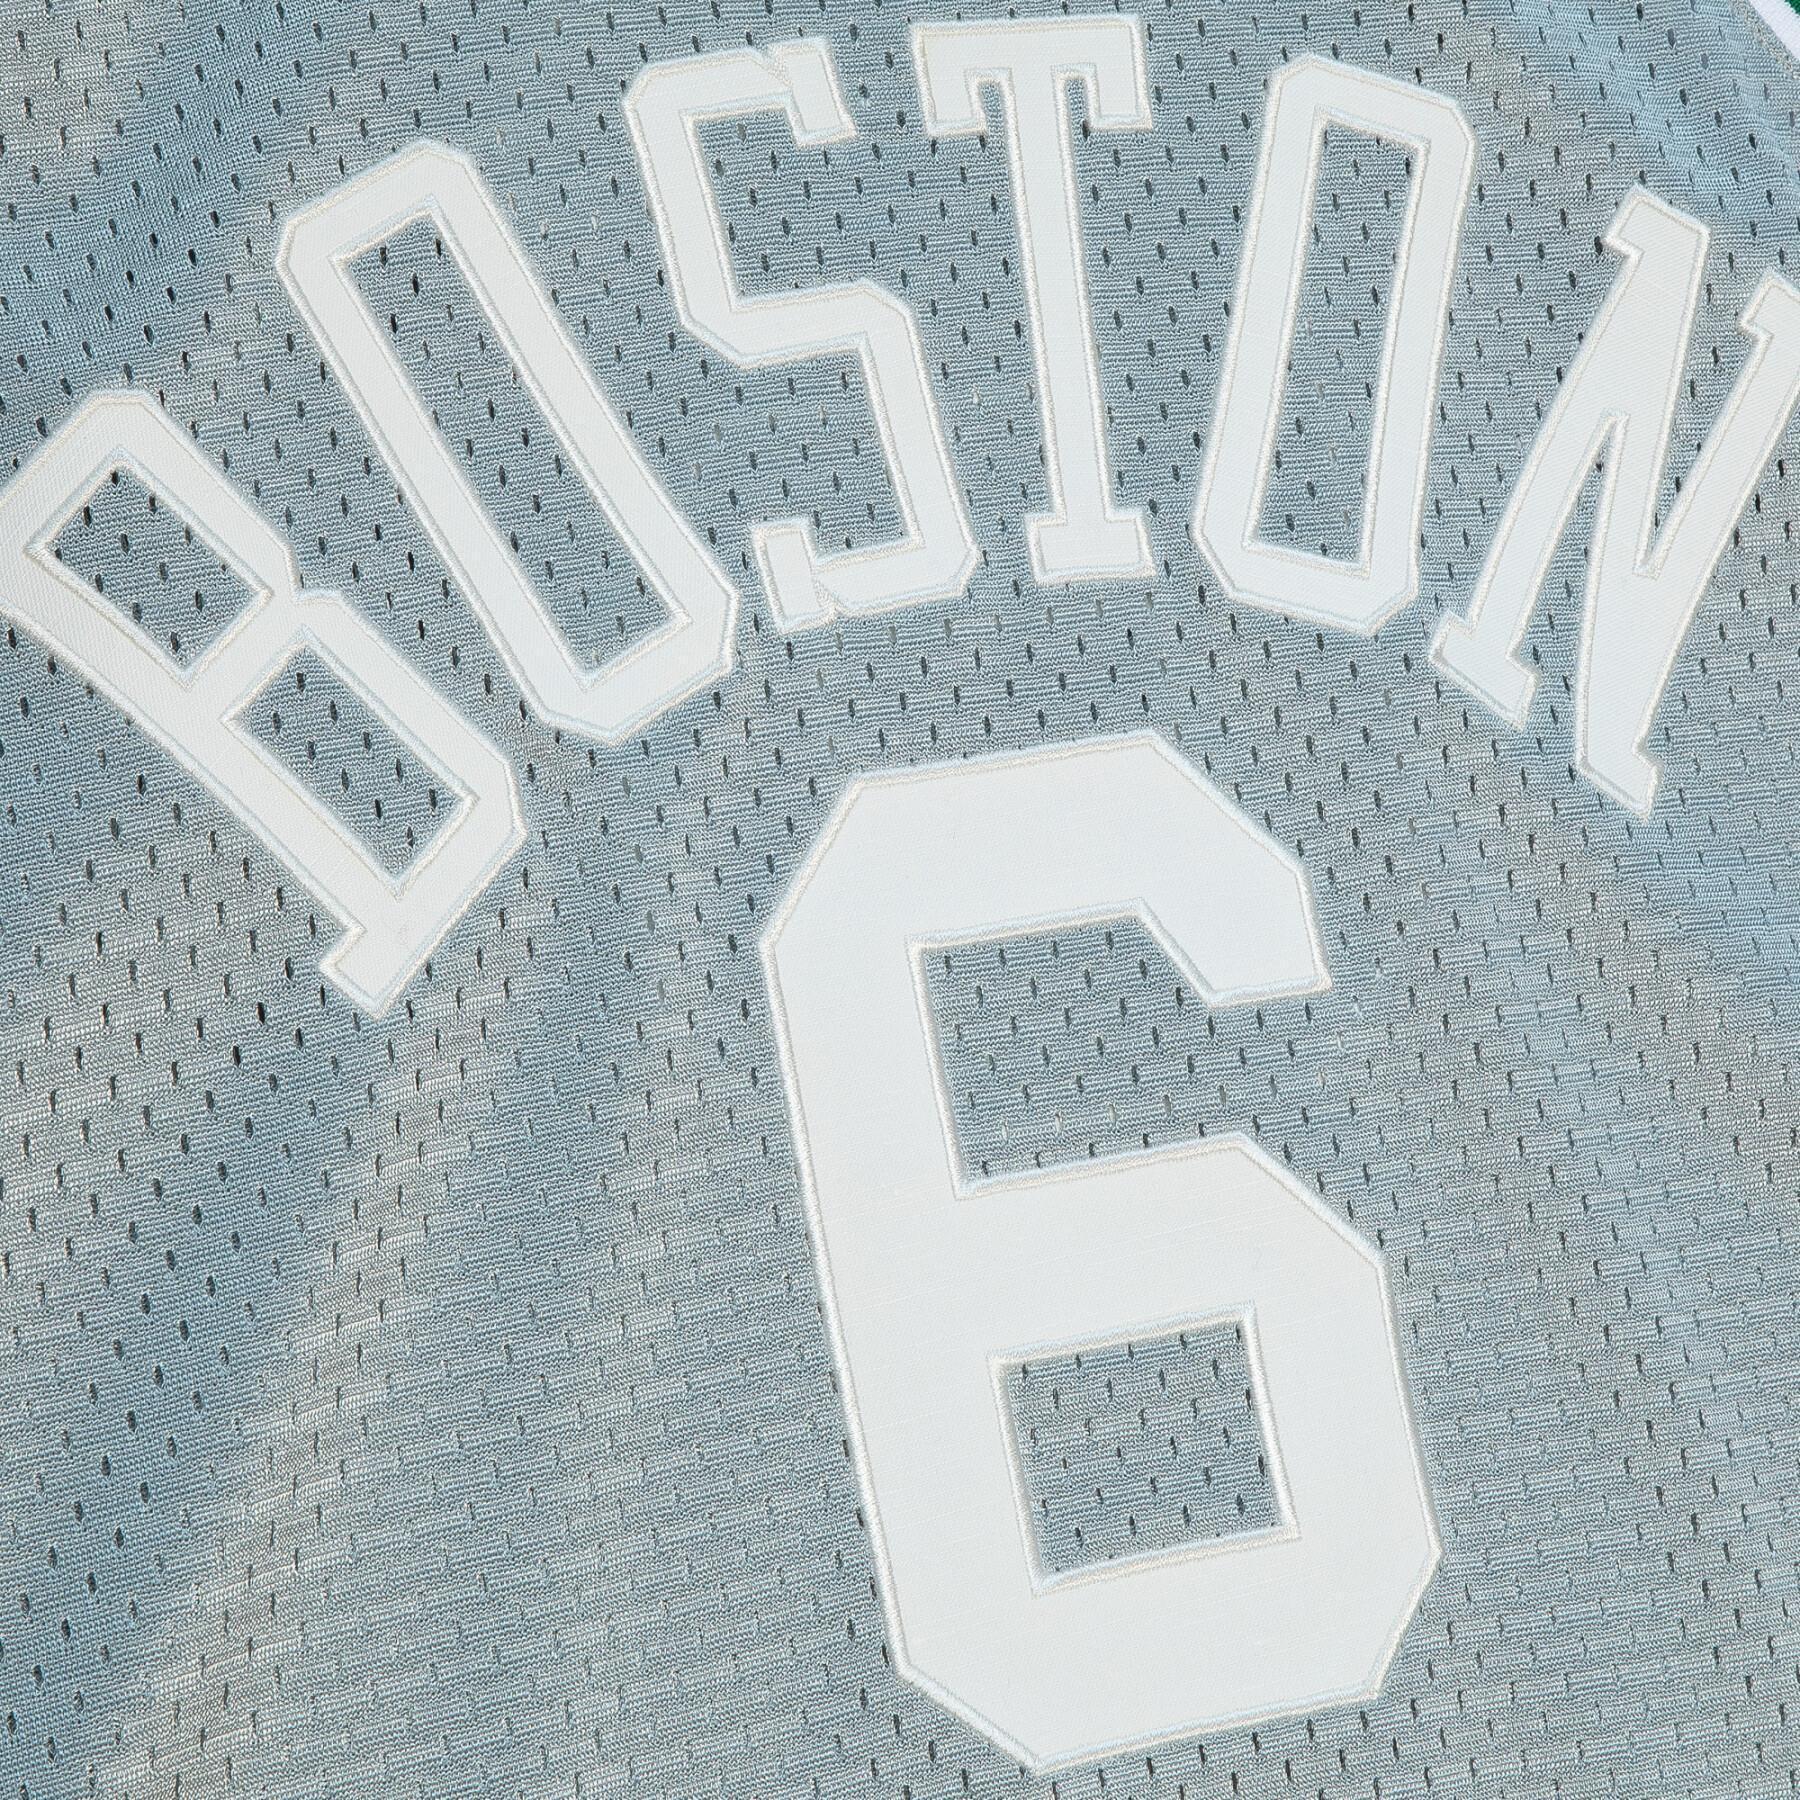 Jersey Boston Celtics 75th NBA 1962